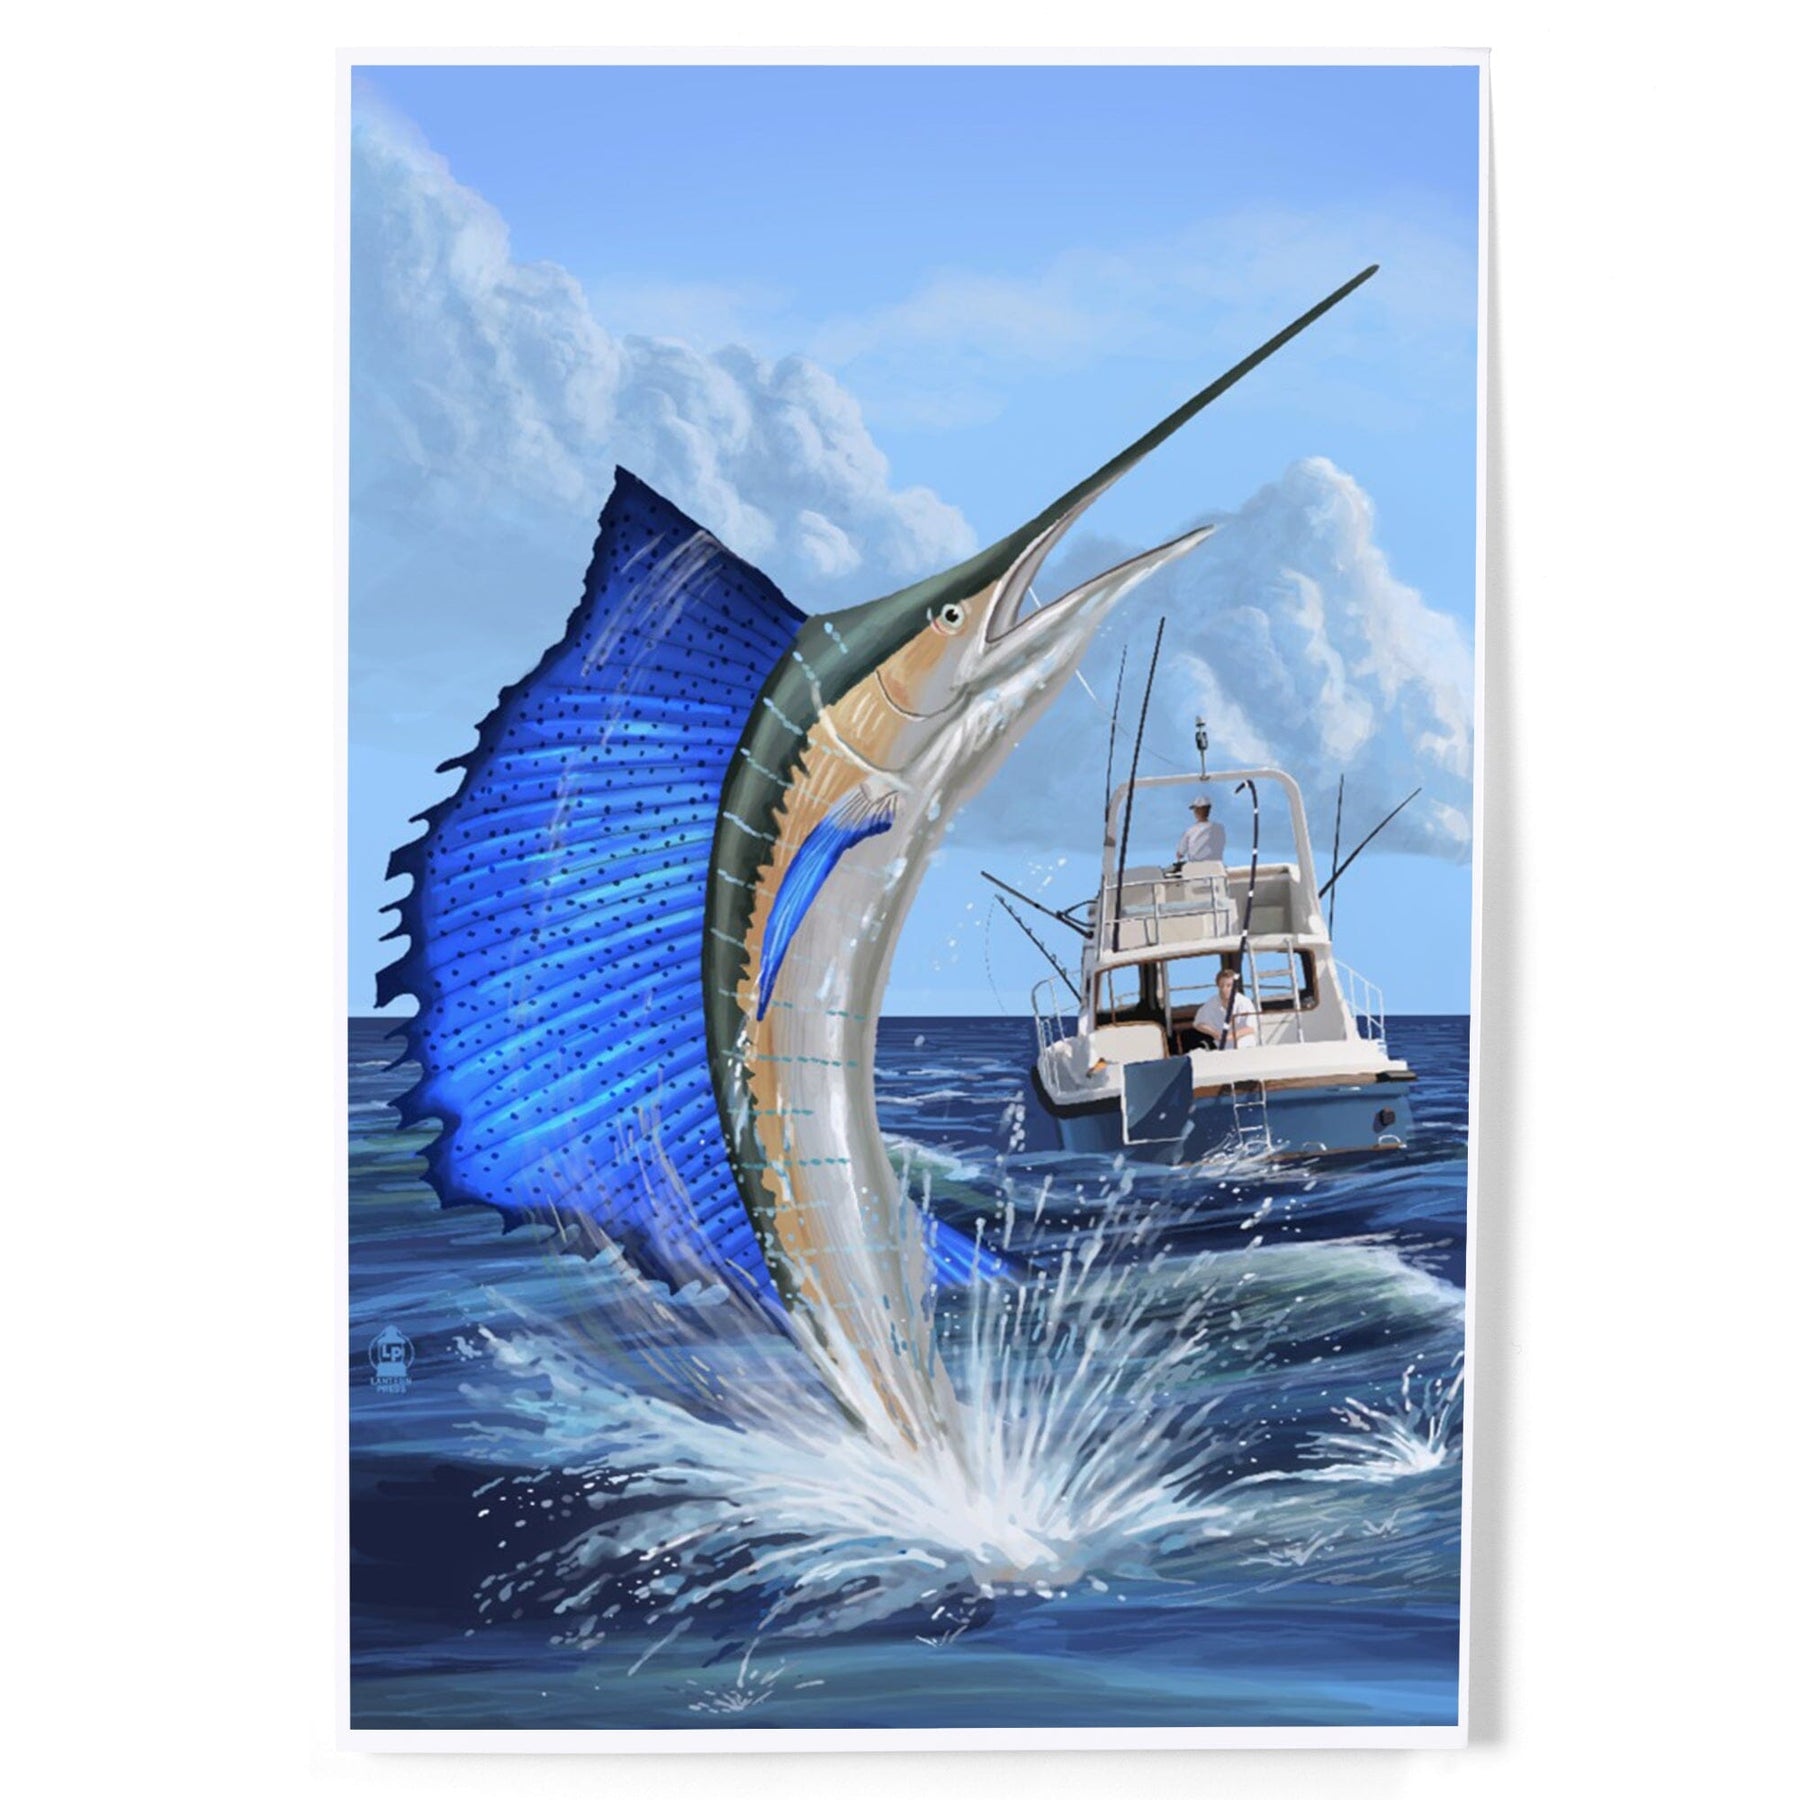 Corolla, North Carolina - Pinup Girl Fishing' Art Print - Lantern Press, Art.com